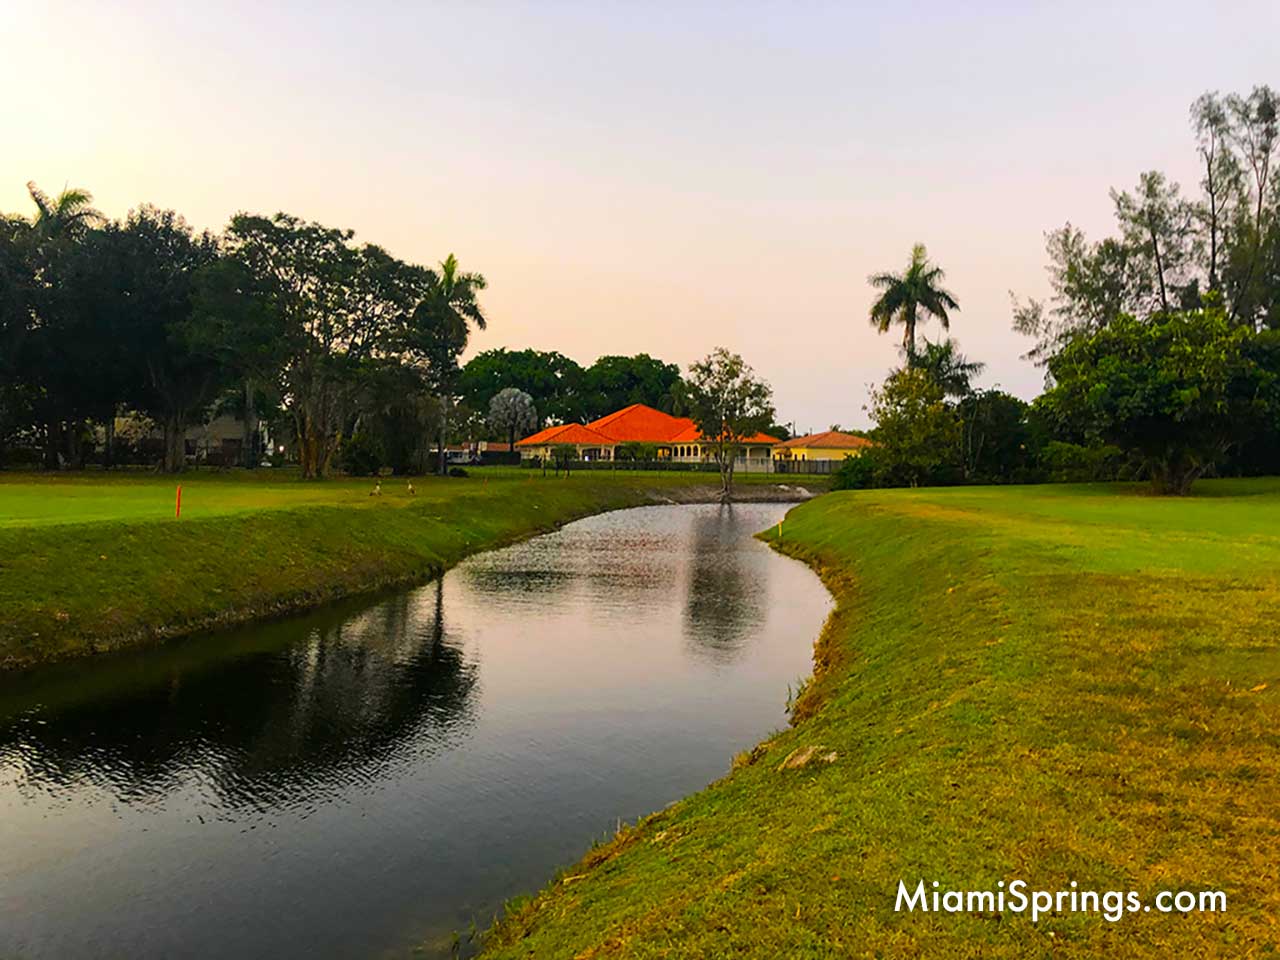 Miami Springs Golf and Country Club (Copyright MiamiSprings.com)